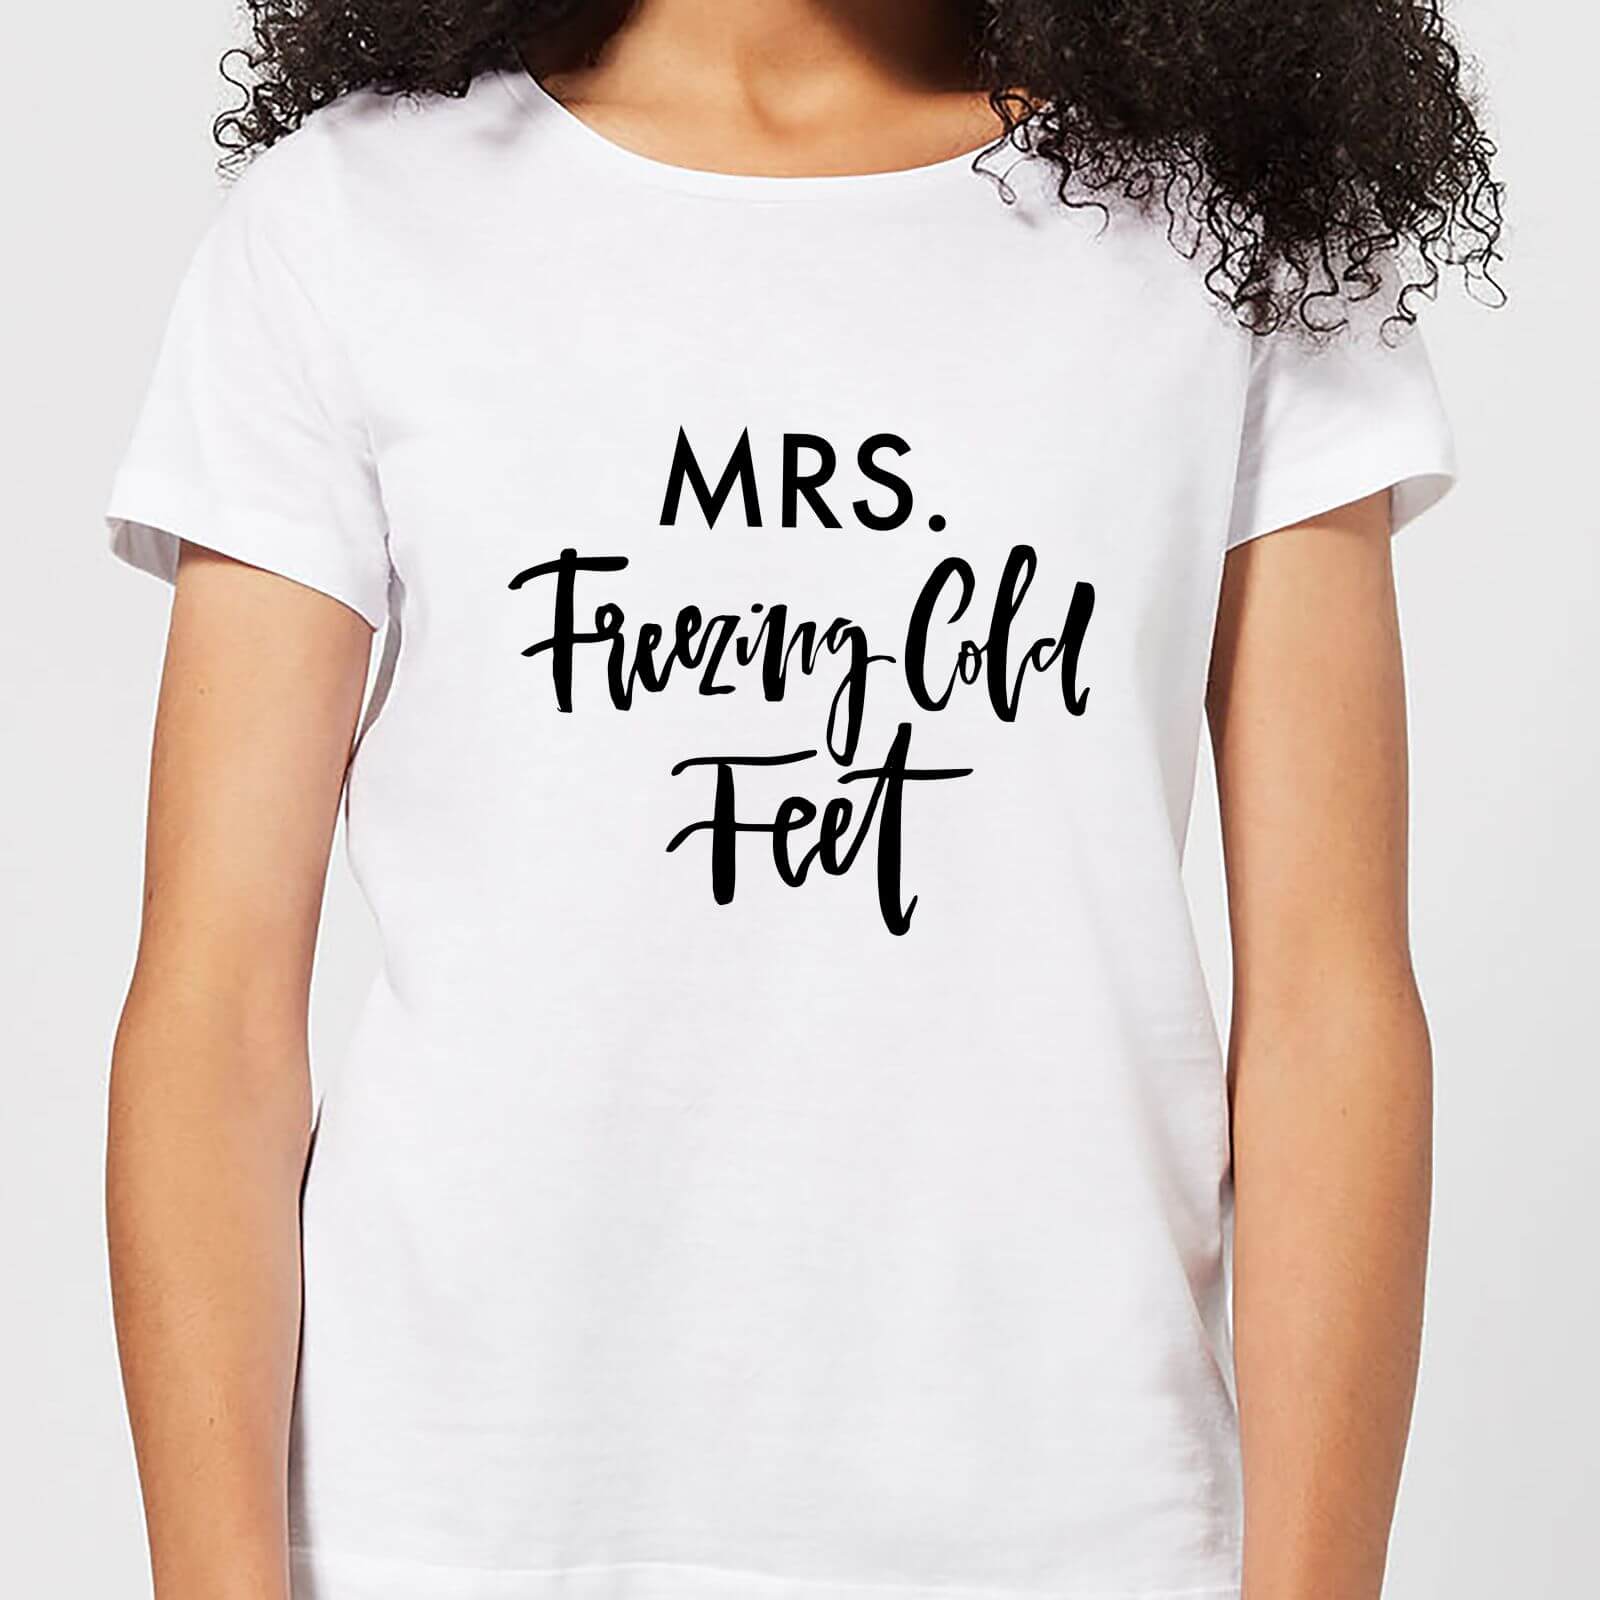 Mrs. Freezing Cold Feet Women's T-Shirt - White - S - White